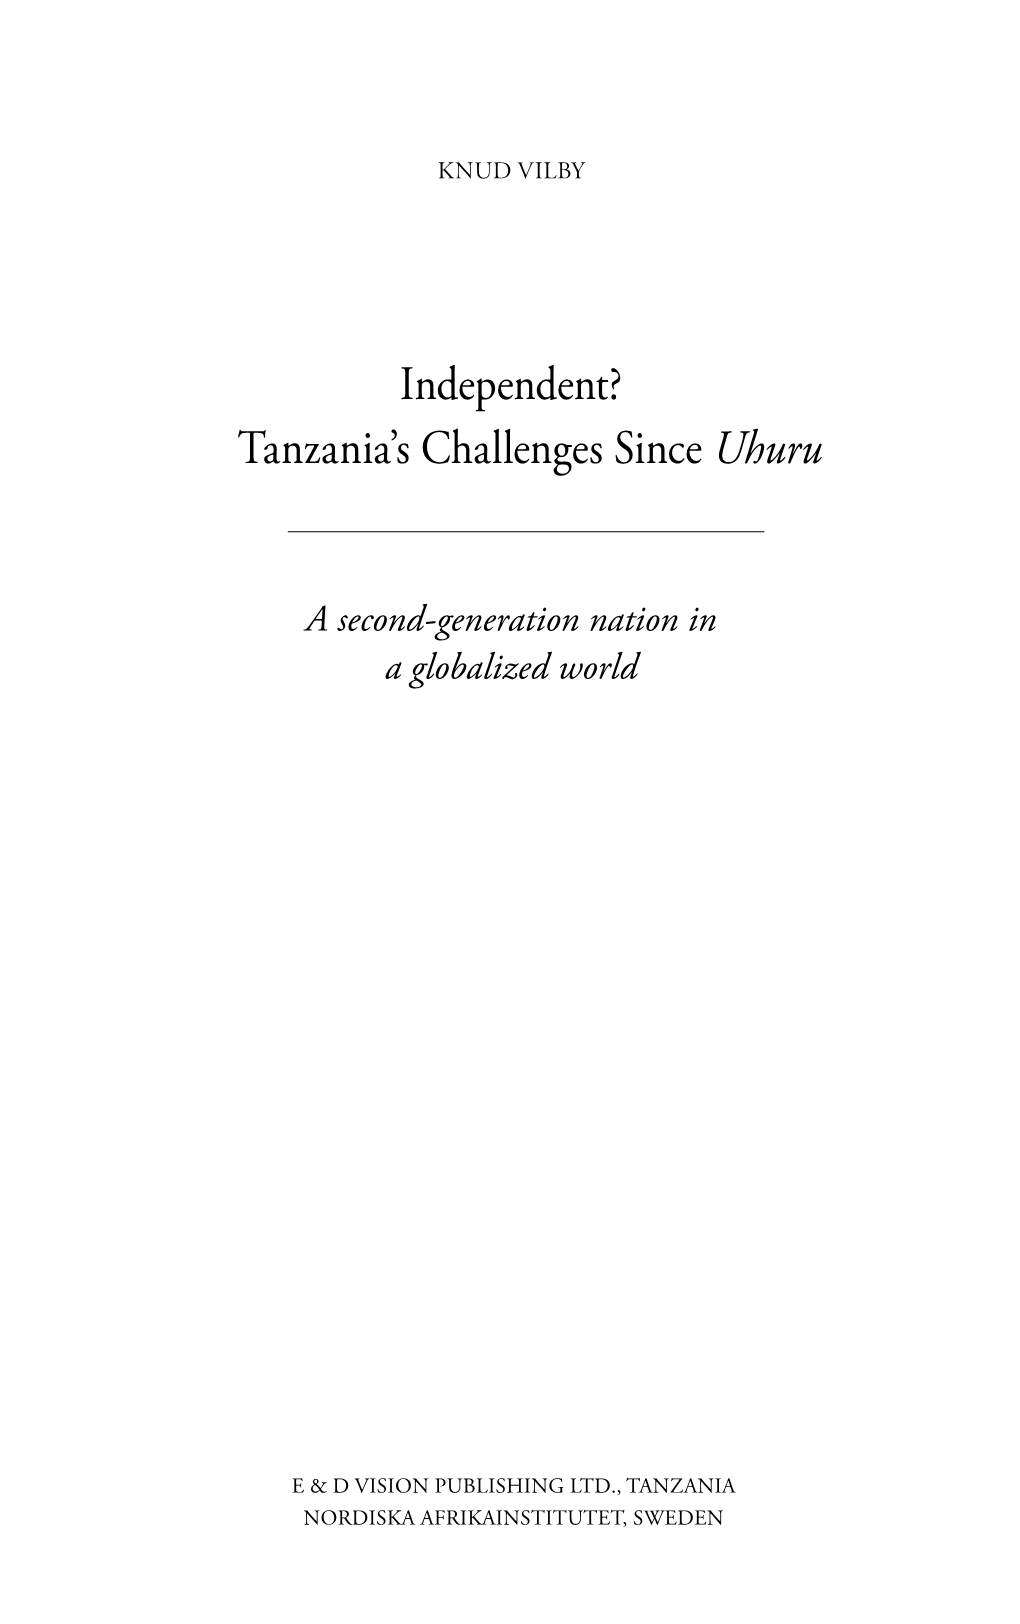 Independent? Tanzania's Challenges Since Uhuru